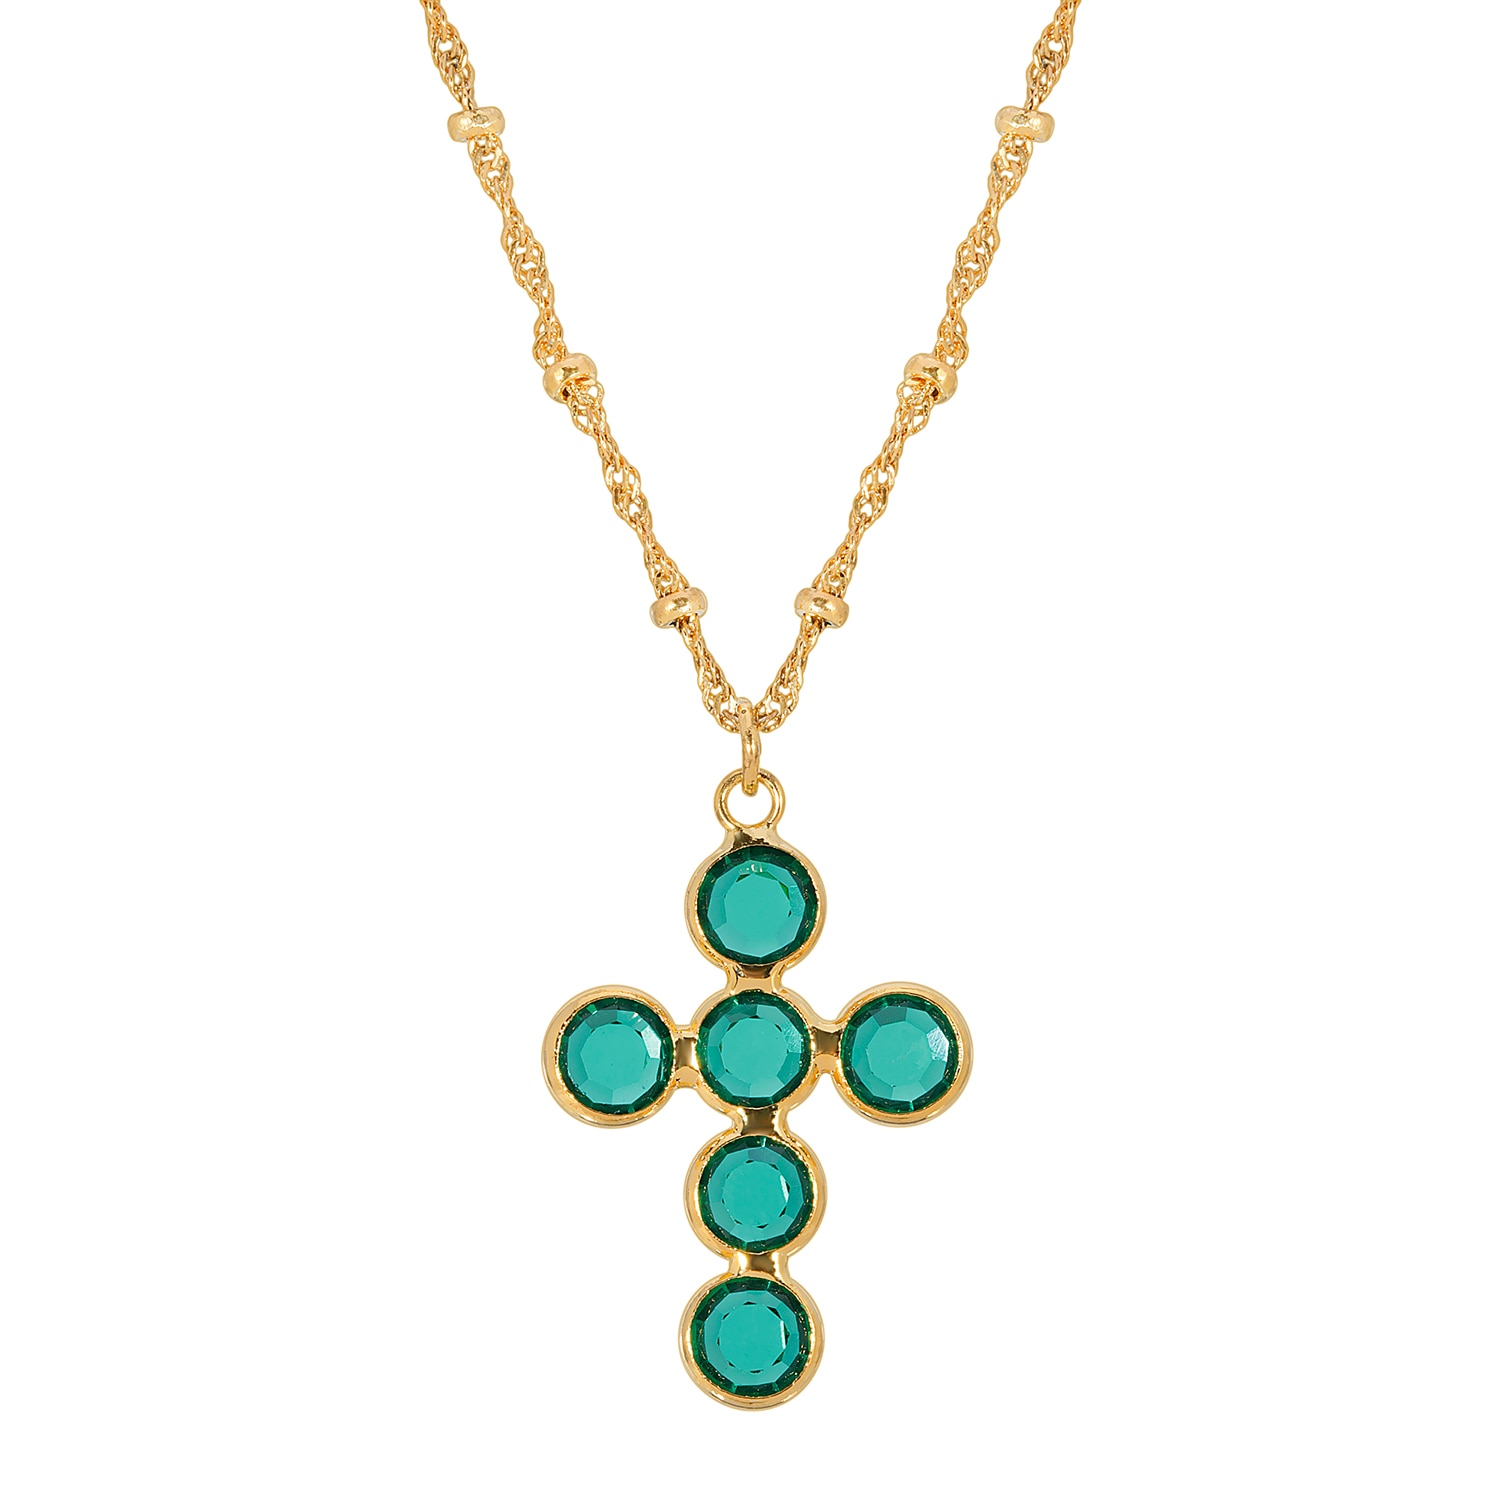 1928 Symbols of Faith Austrian crystal cross necklace 16-19 inch adjustable chain